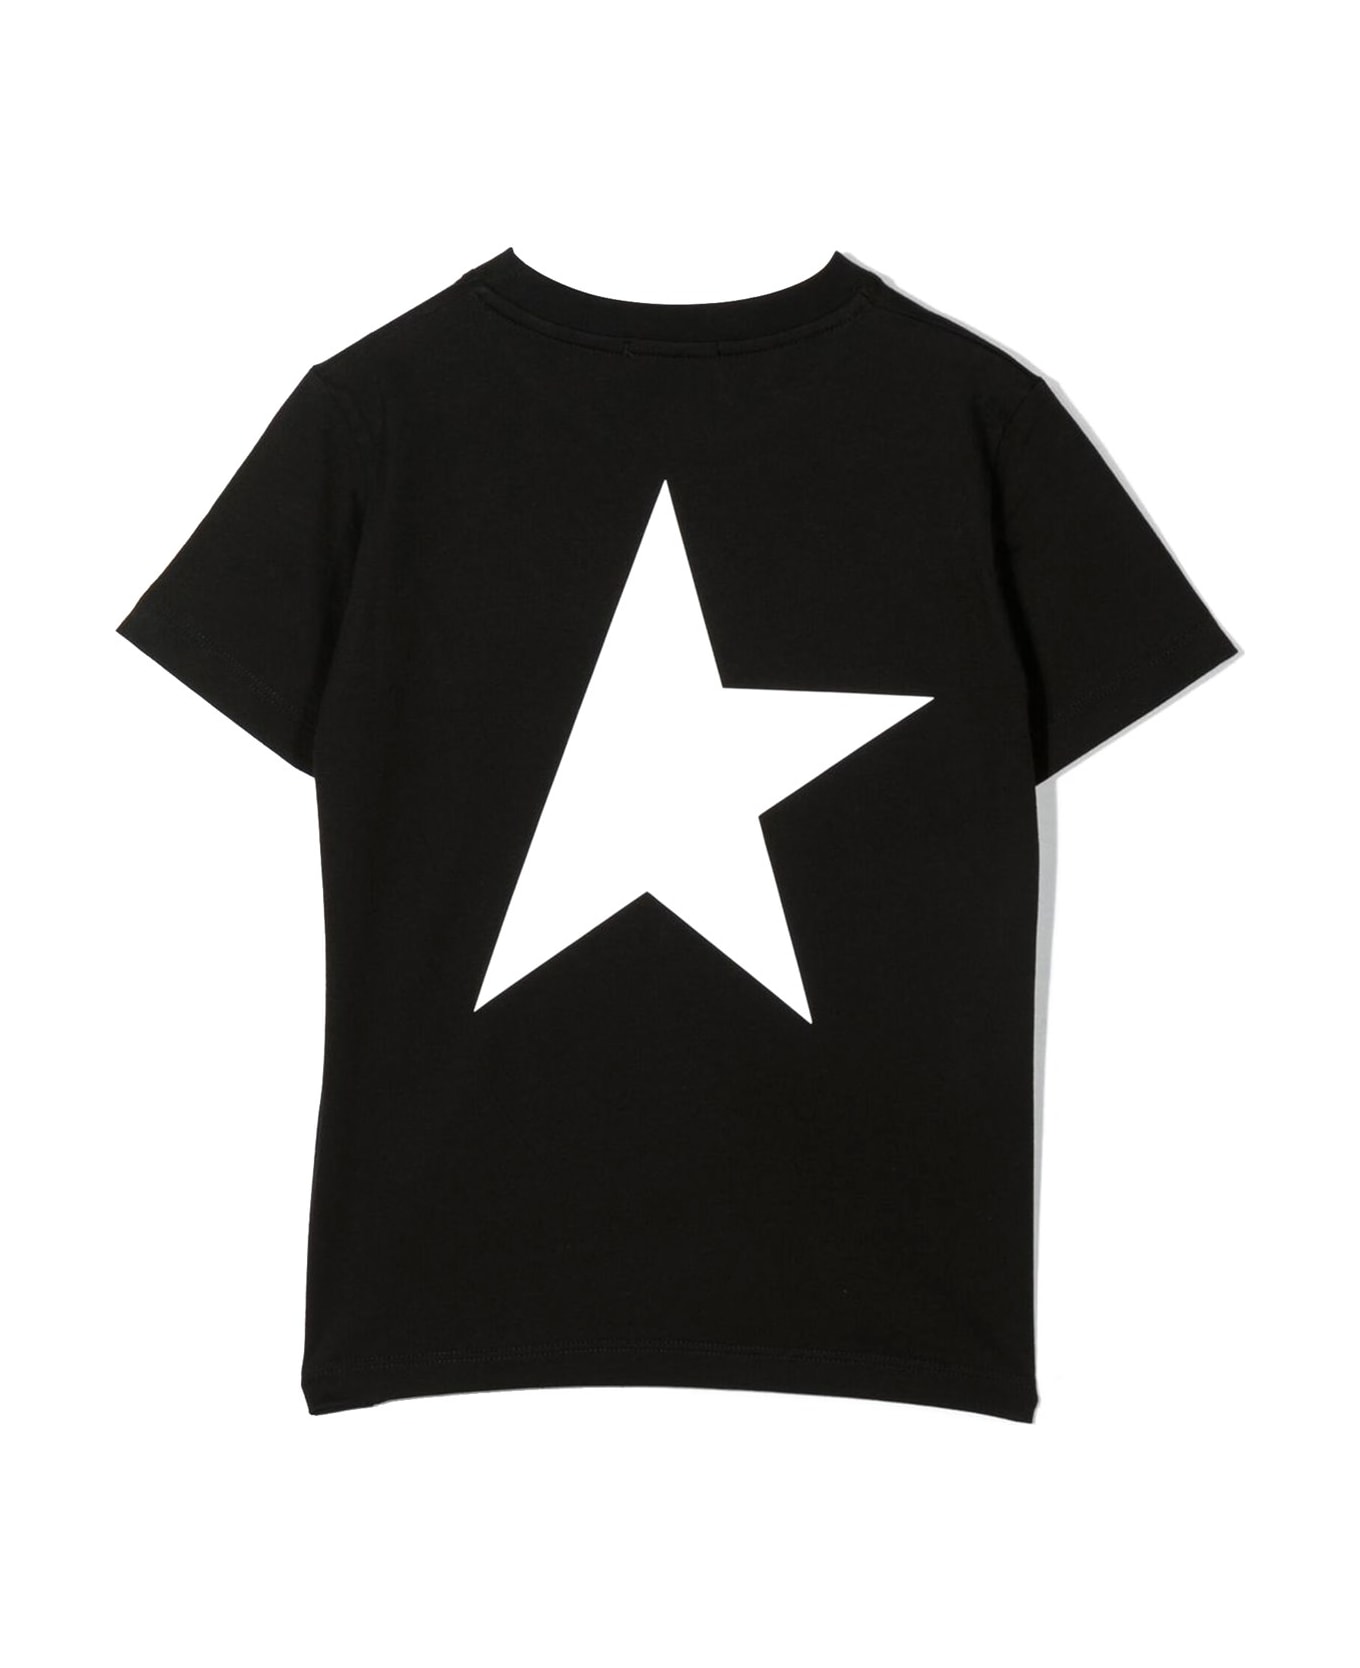 Golden Goose Star/ Boy's T-shirt S/s Logo/ Big Star Printed - NERO